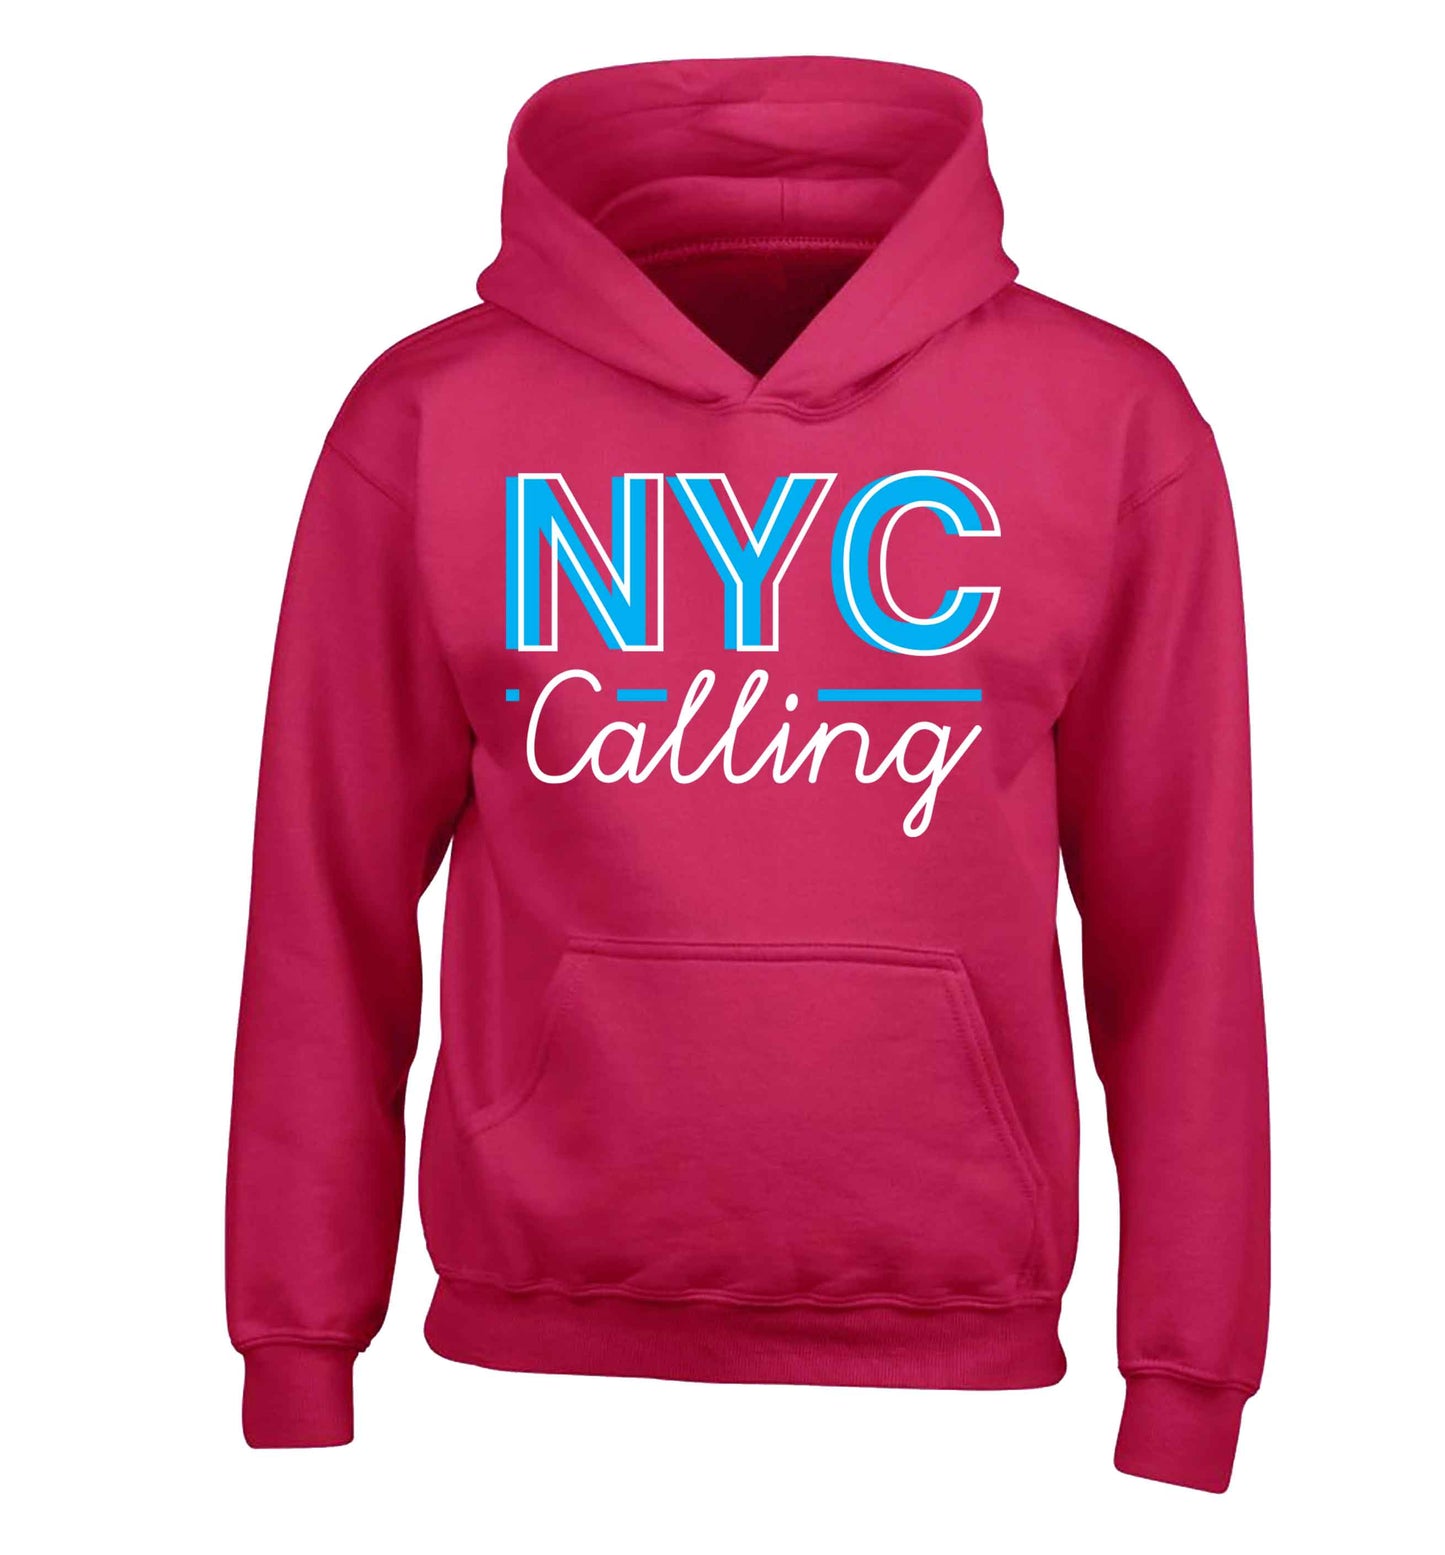 NYC calling children's pink hoodie 12-13 Years